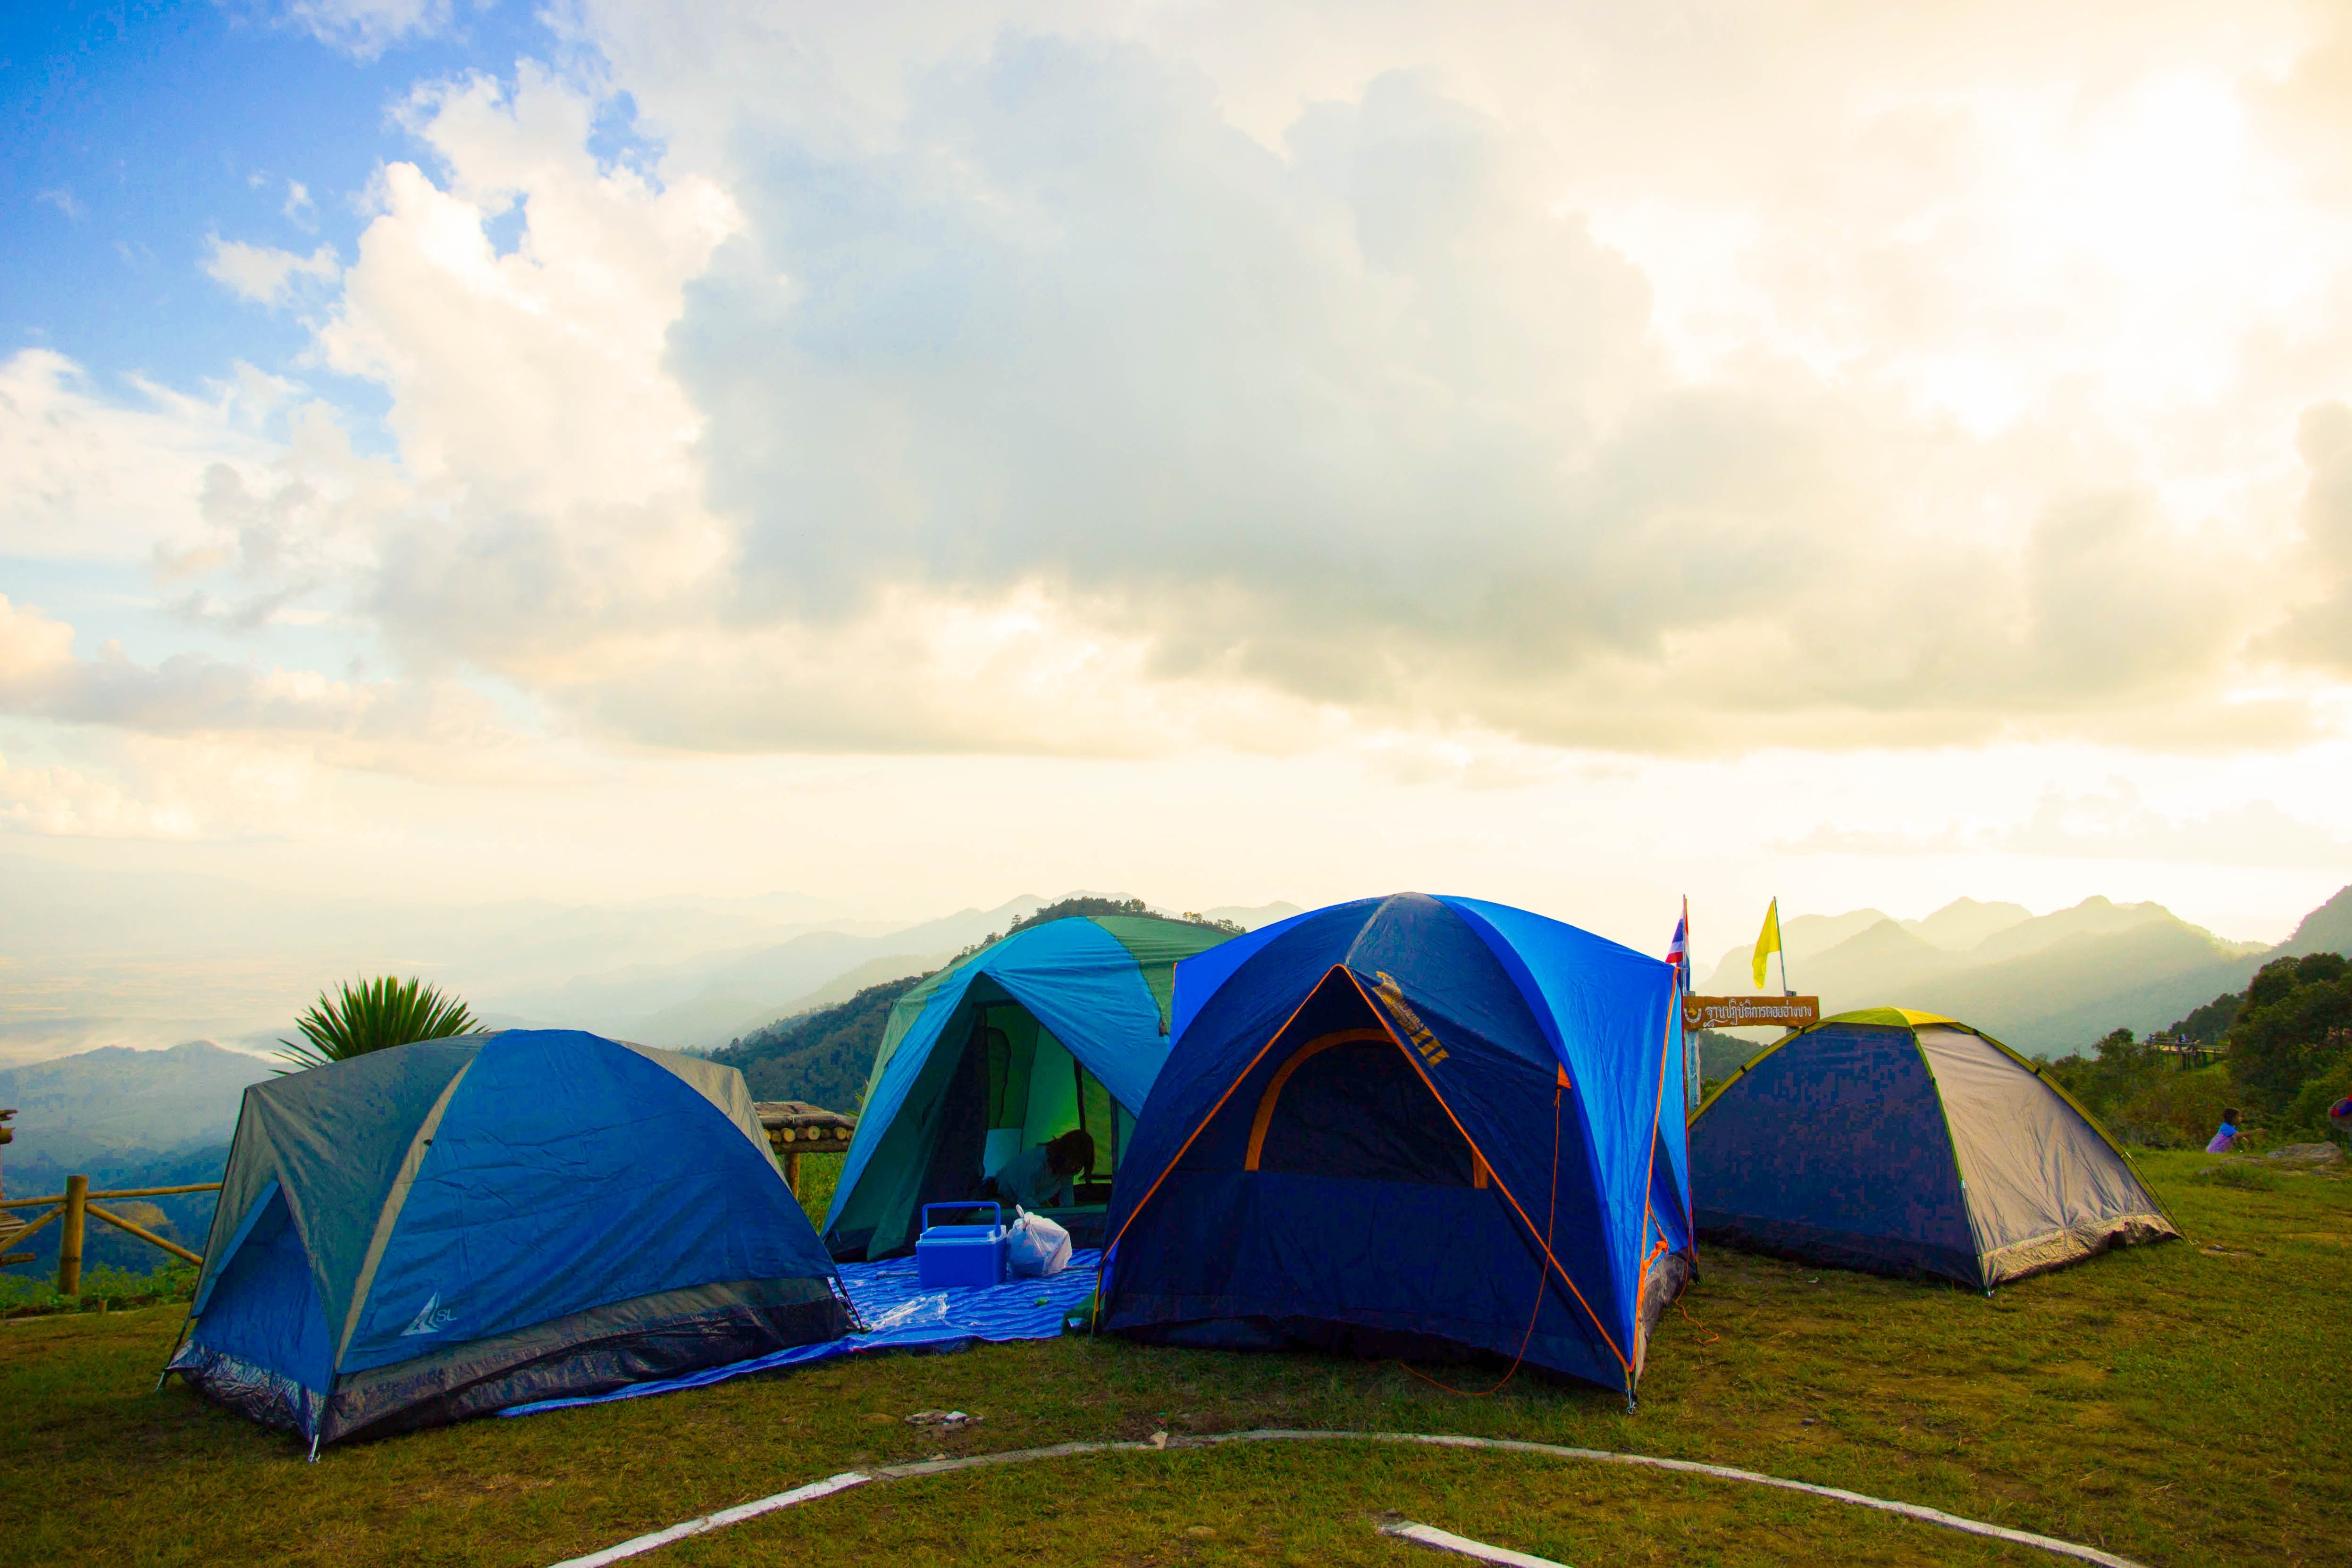 four blue dome tents